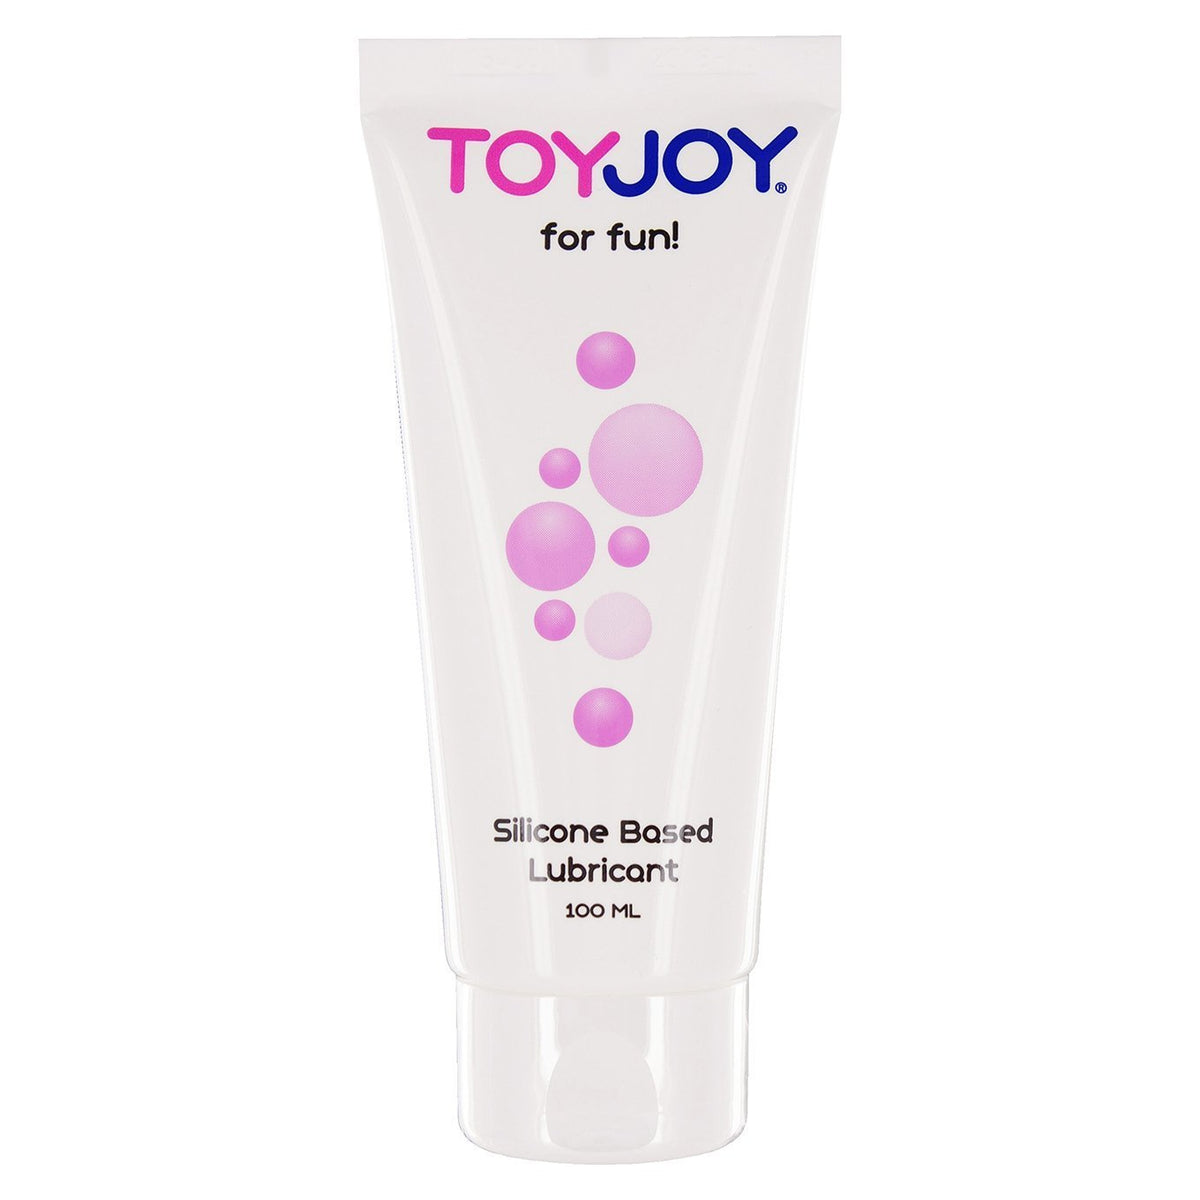 ToyJoy - Silicone Based Lubricant 100 ml -  Lube (Silicone Based)  Durio.sg